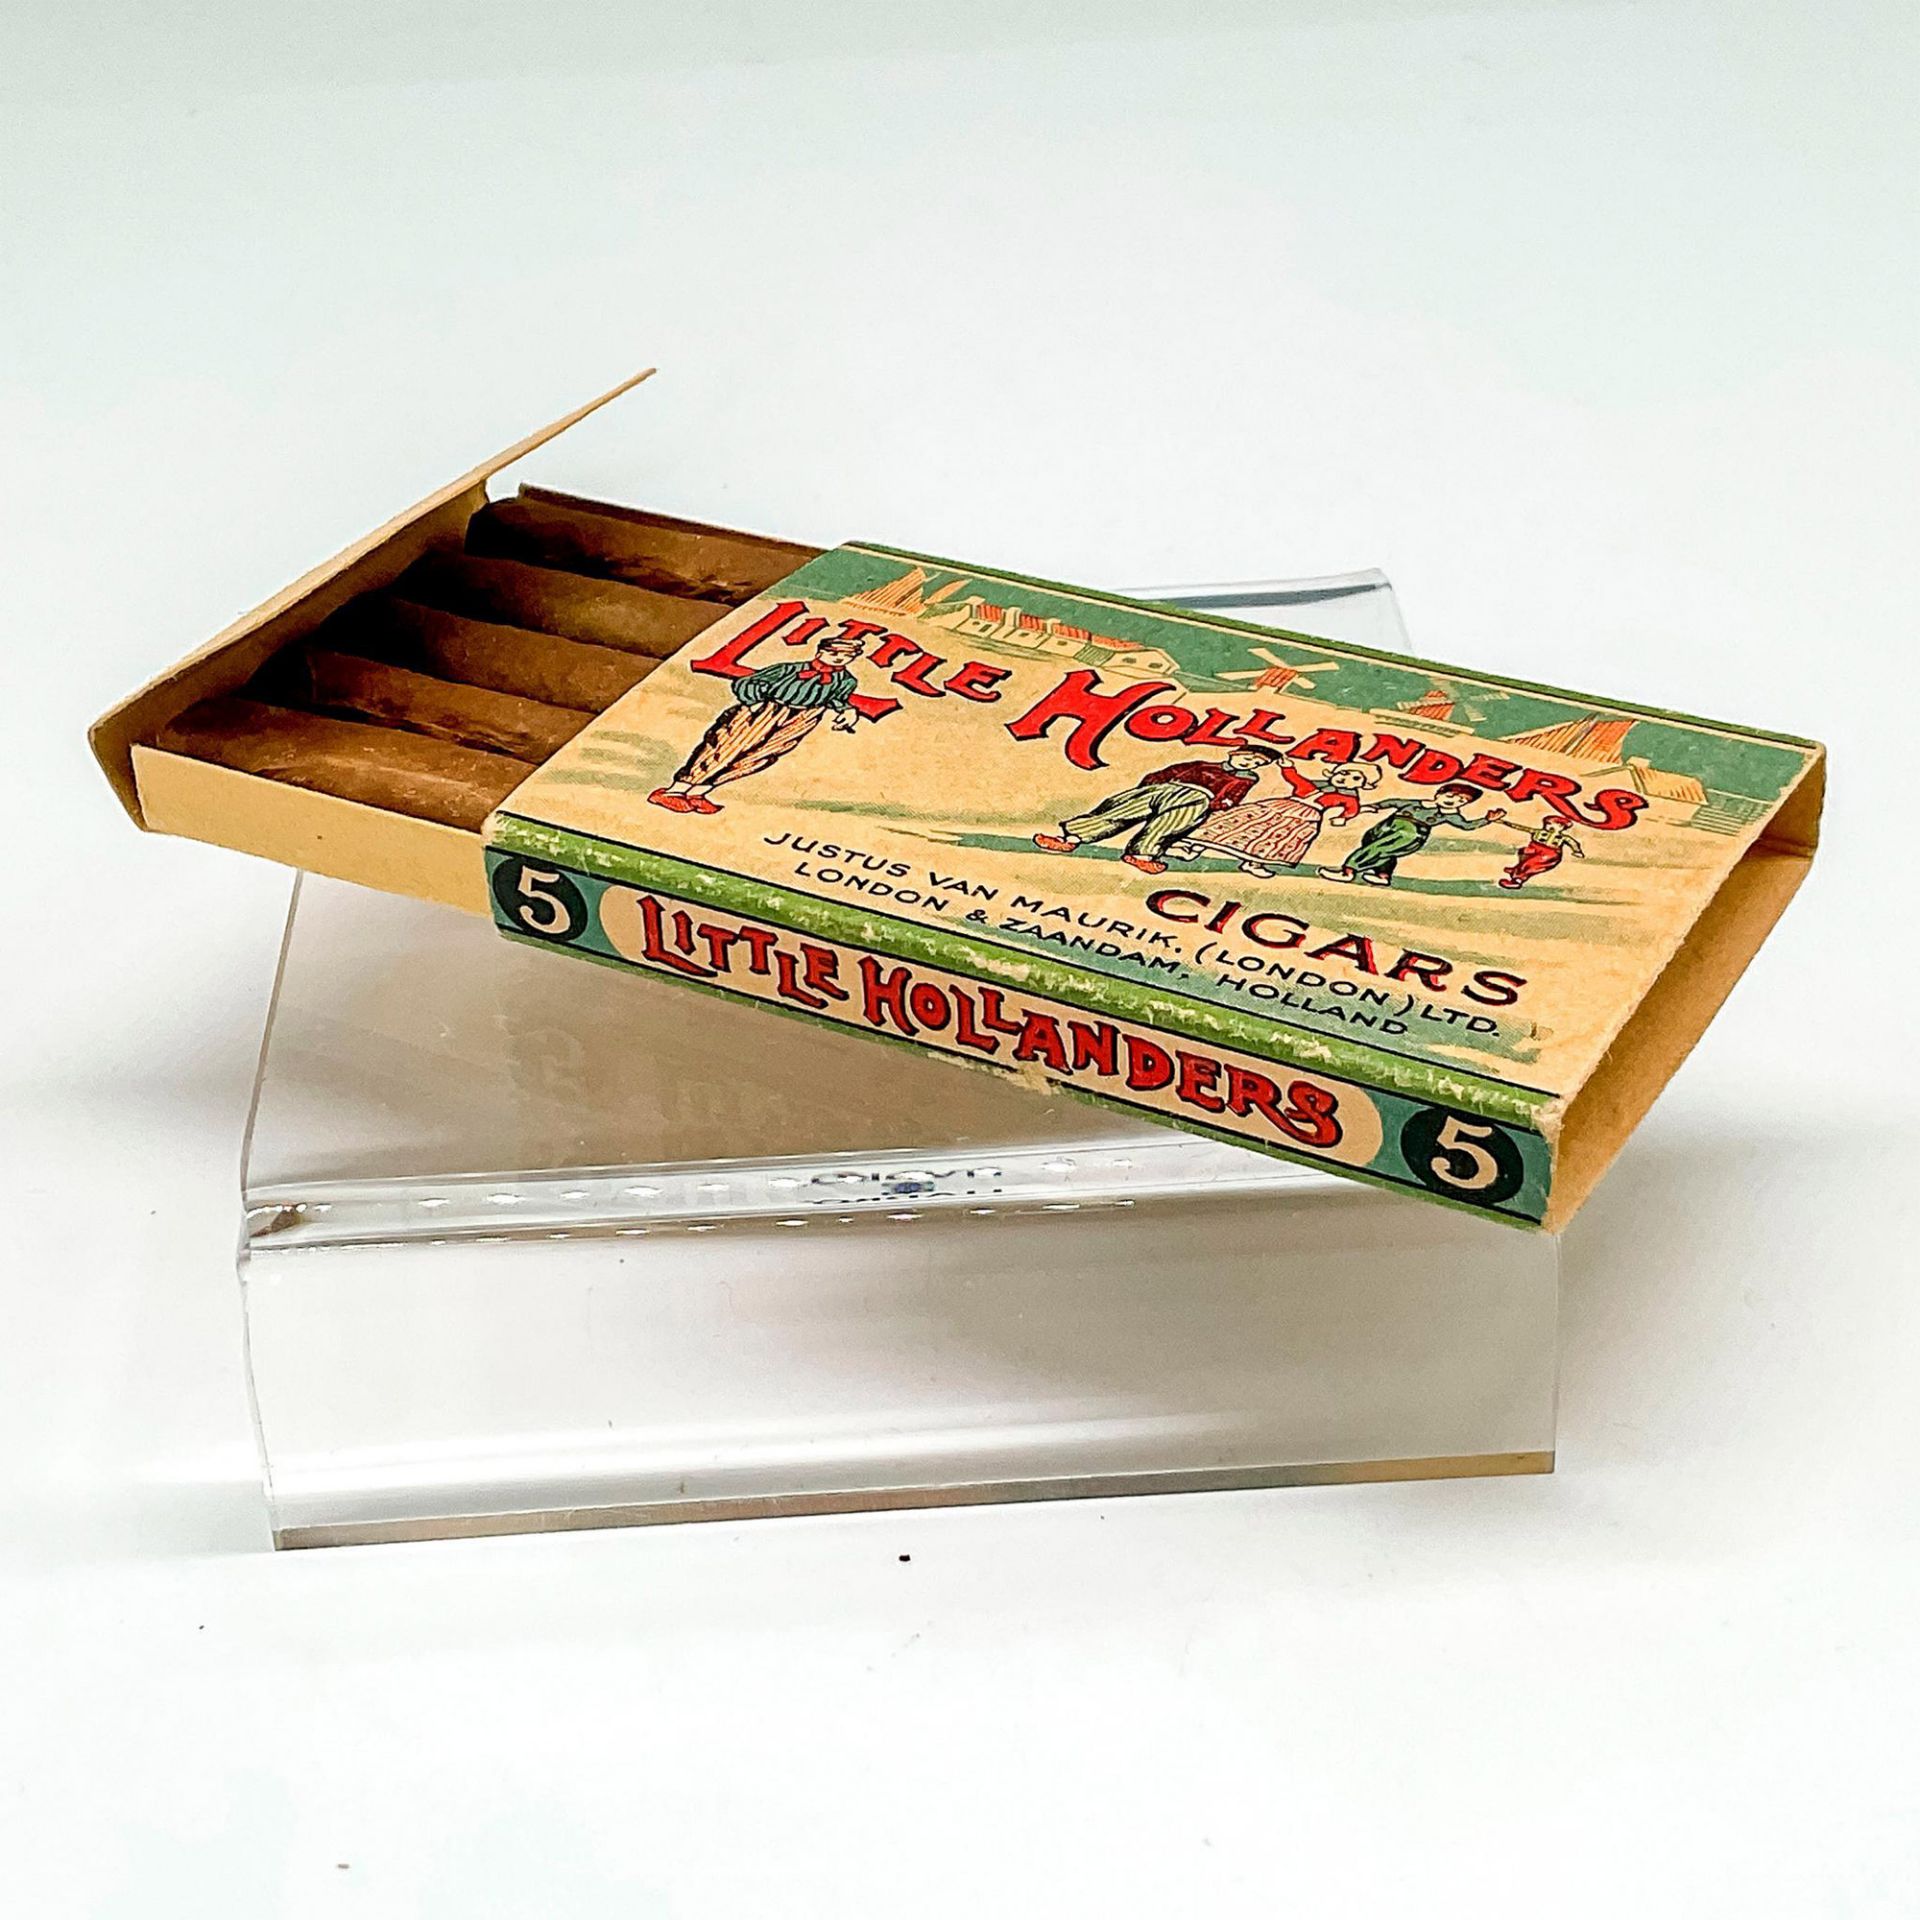 Vintage Little Hollanders Cigar Box - Image 3 of 3